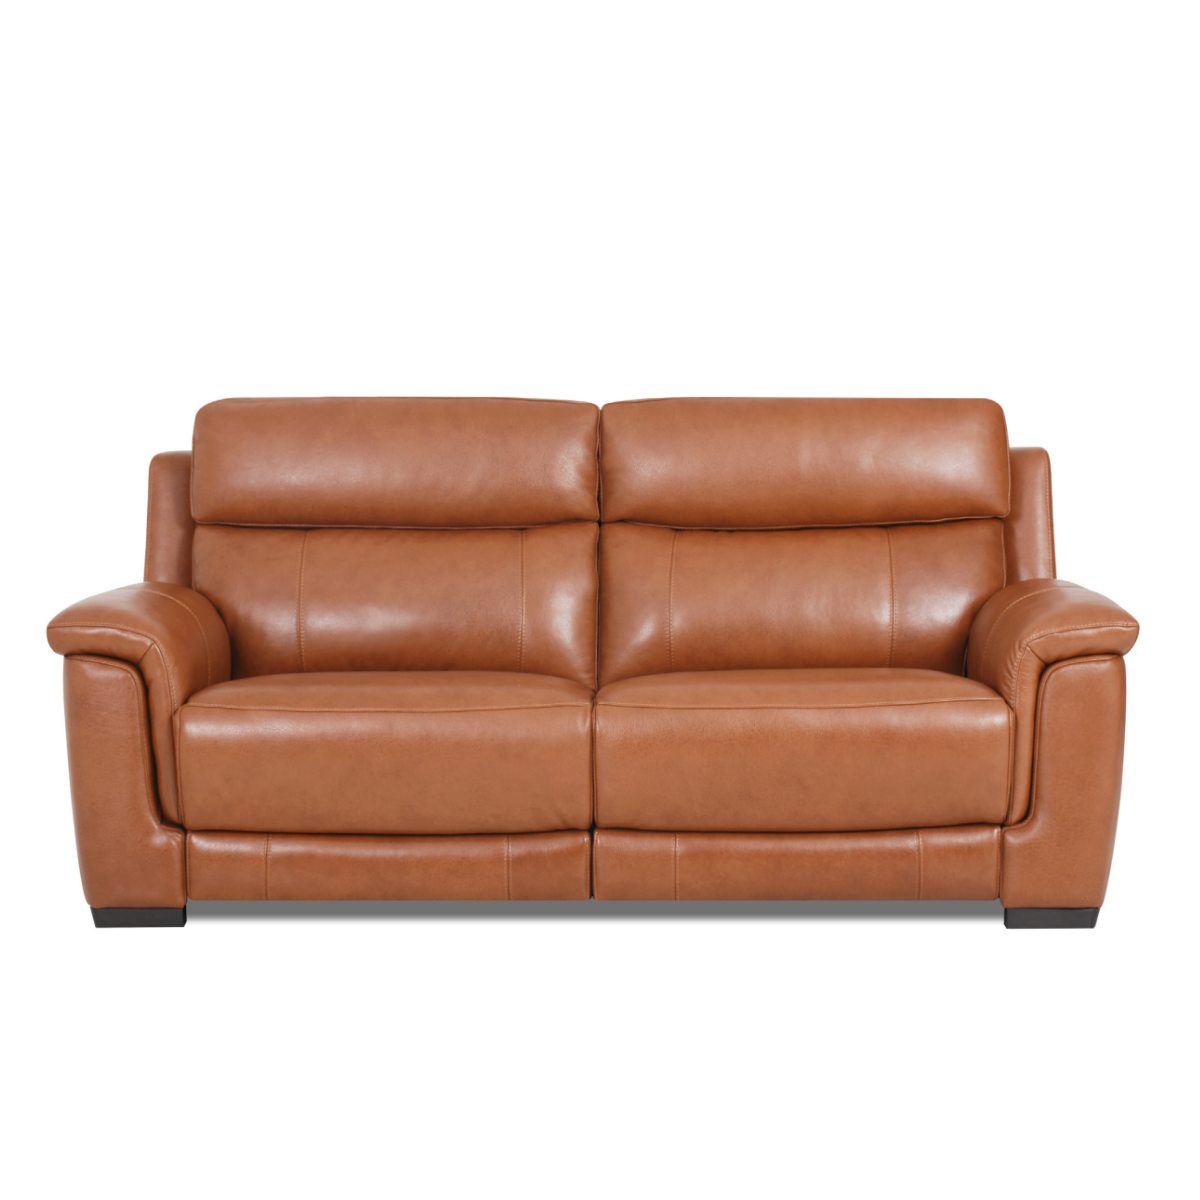 Preston 2.5 Recliner Sofa - Pecan Brown Leather